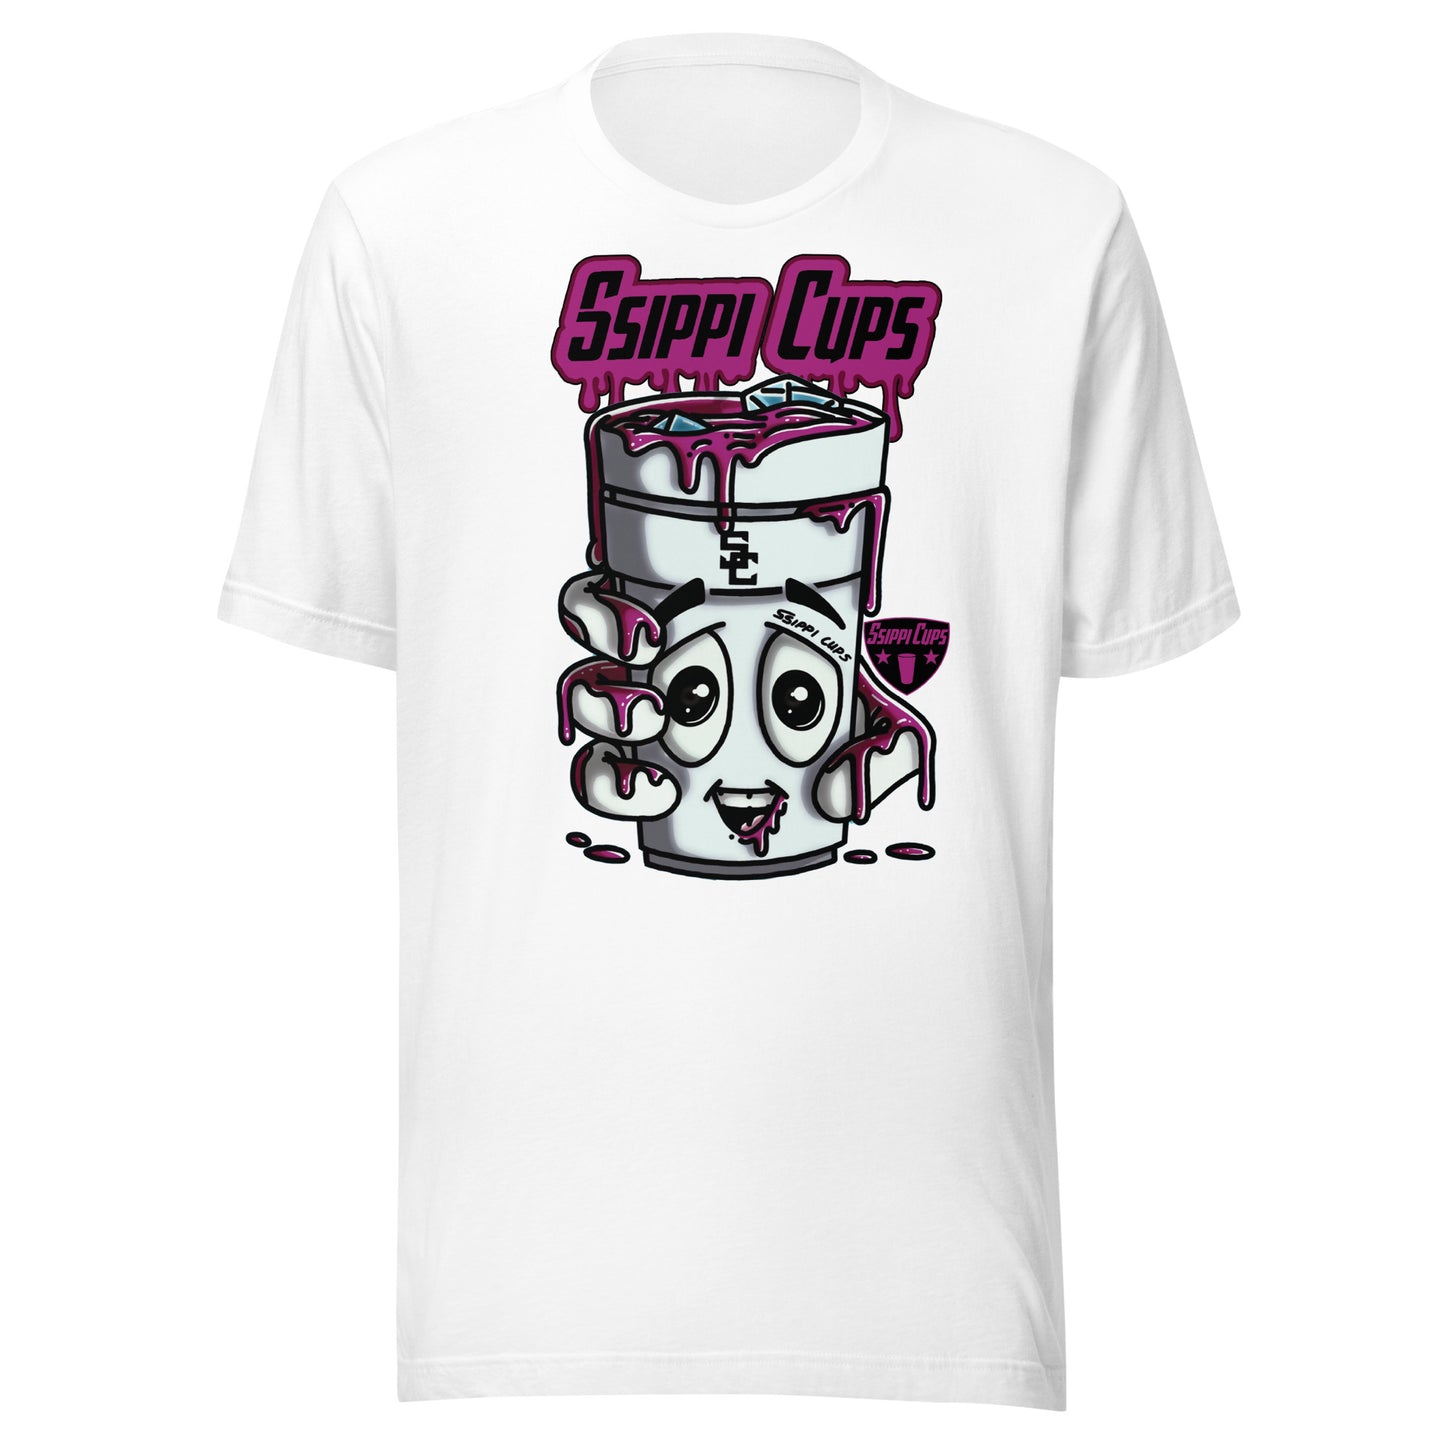 Sippy Drippy Logo Unisex t-shirt